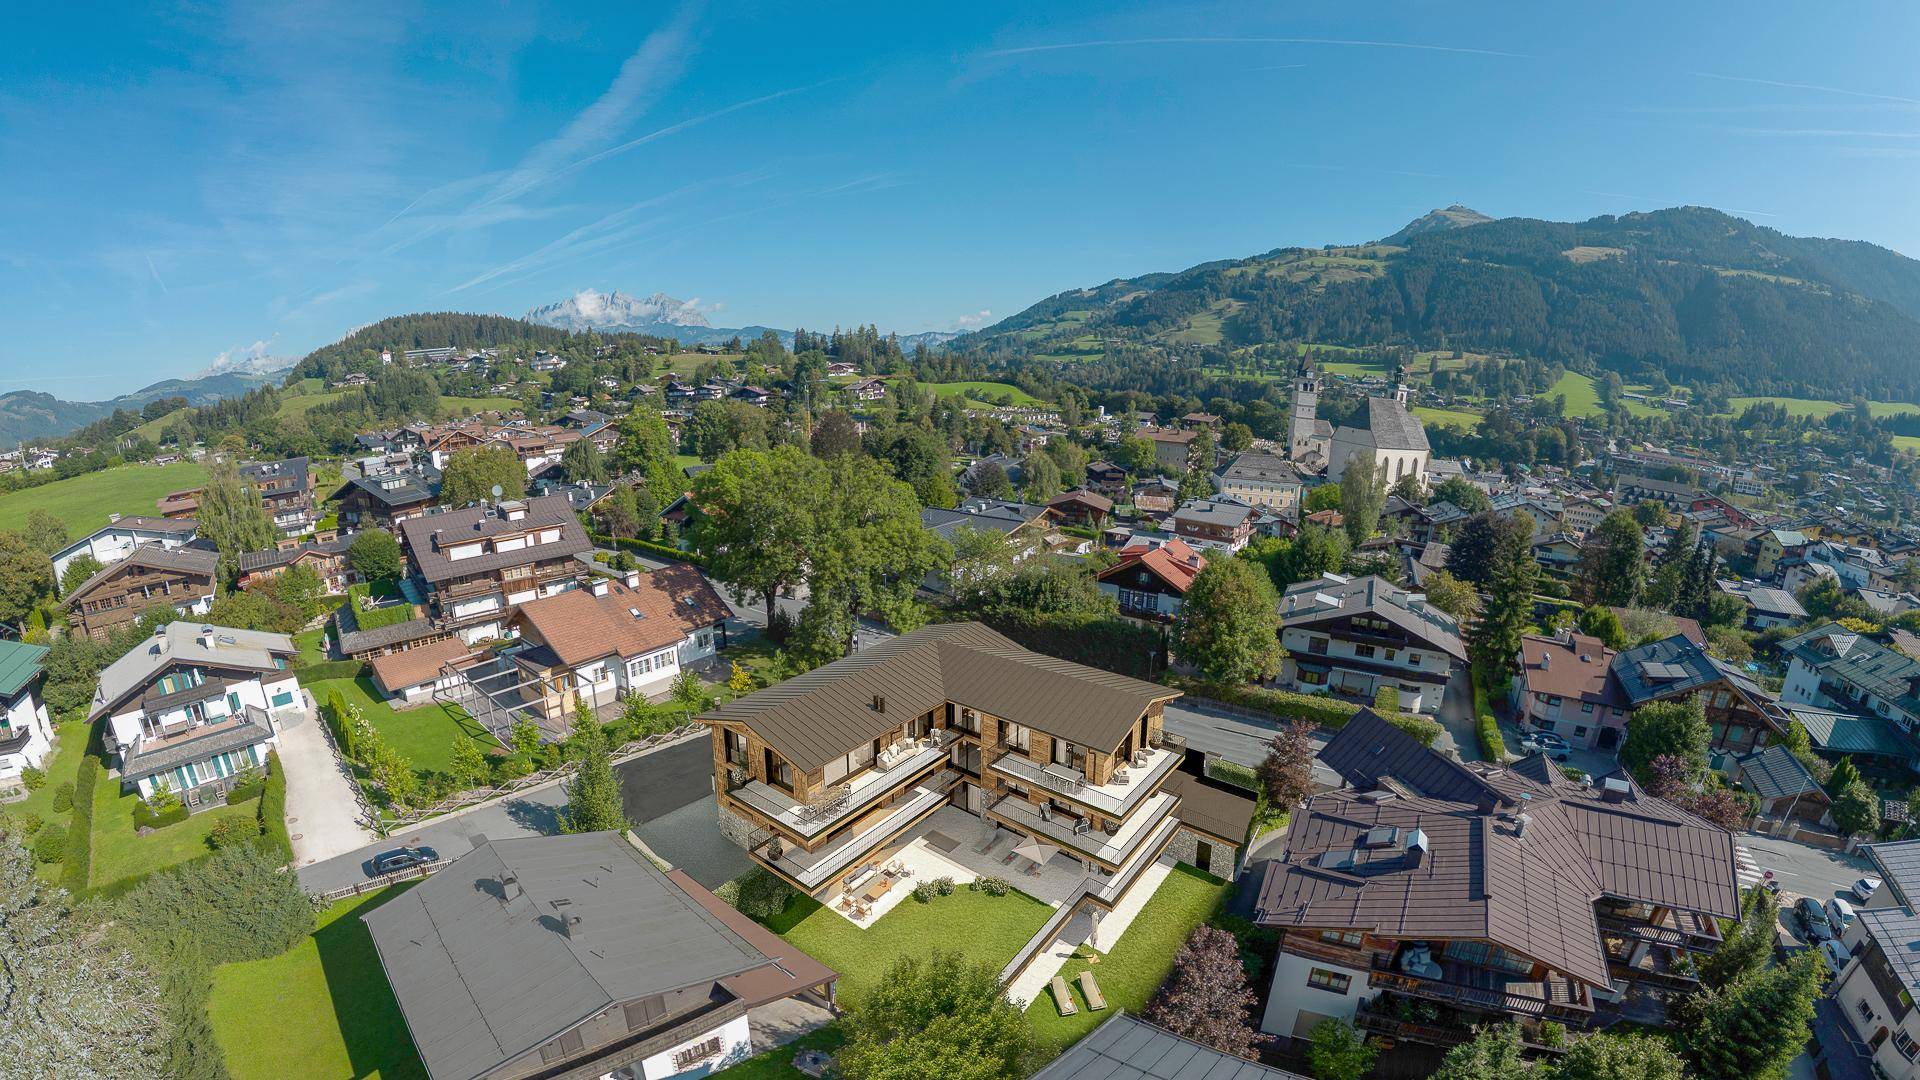 KITZIMMO-Exklusive Erdgeschossmaisonette in zentraler Toplage kaufen - Immobilien Kitzbühel.